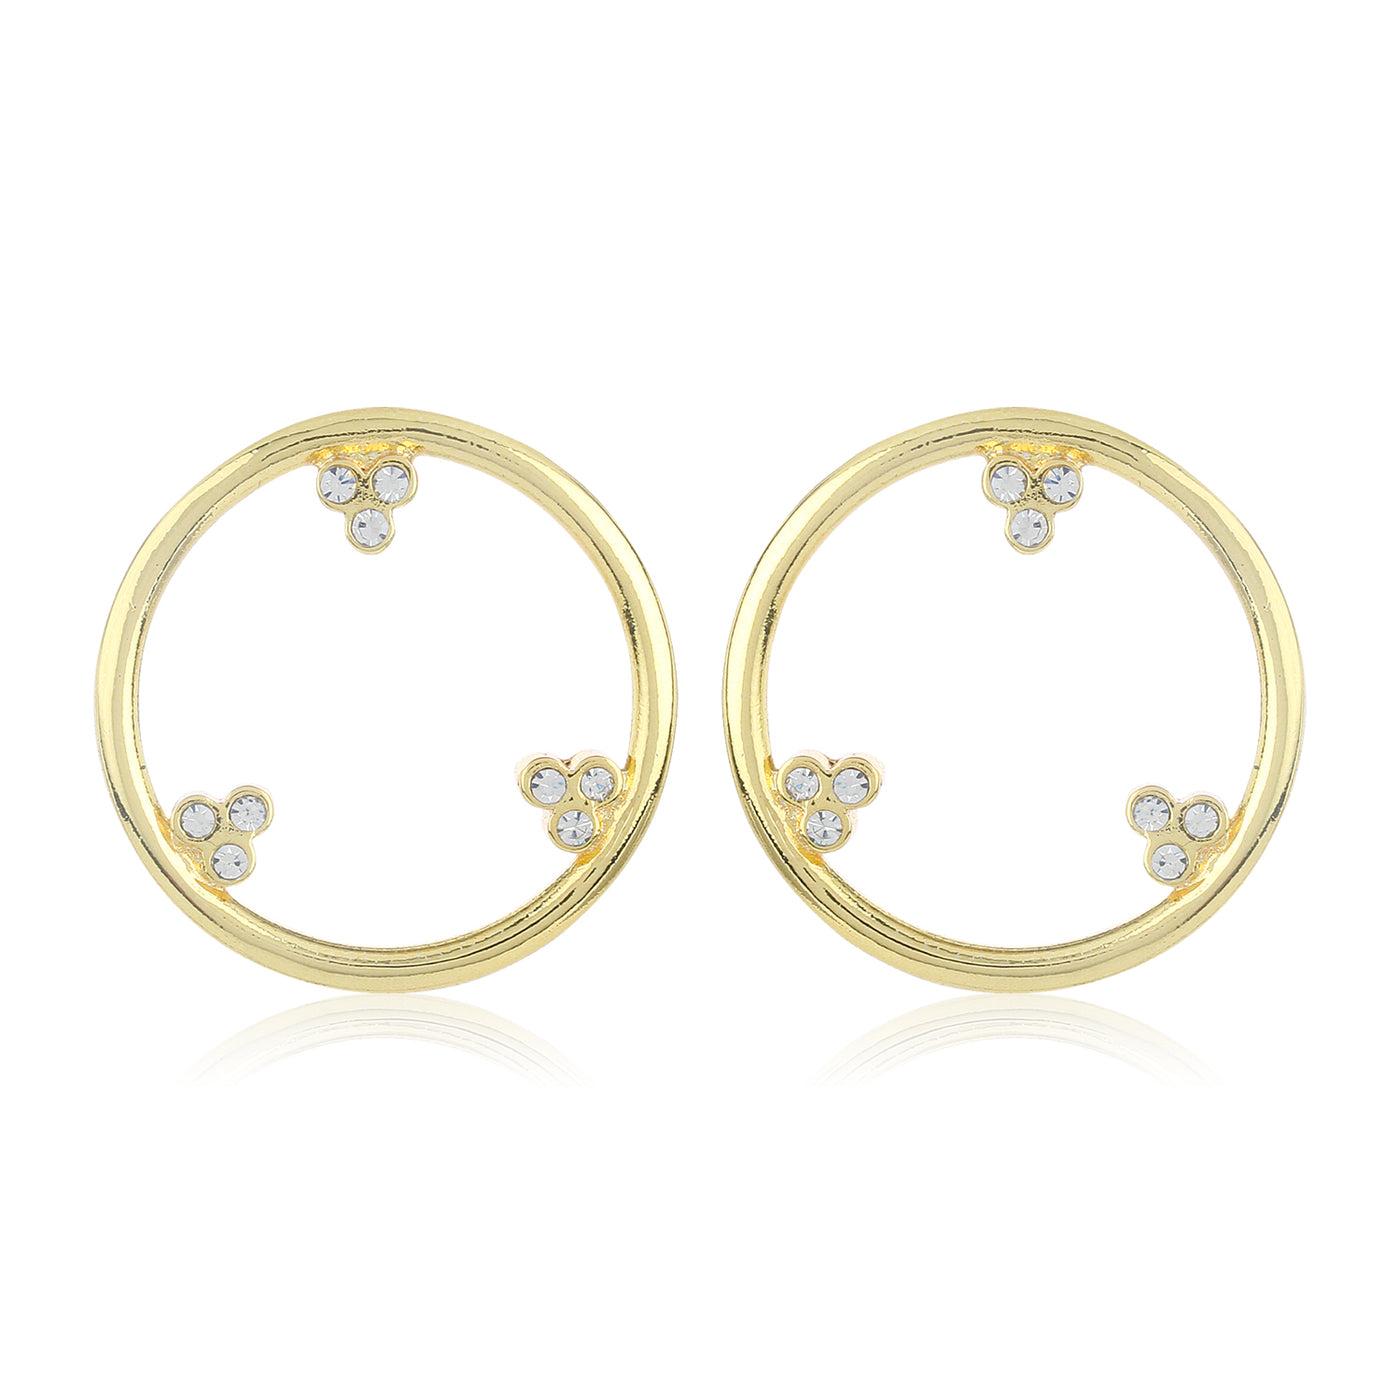 Gold And Diamond Earrings Combo